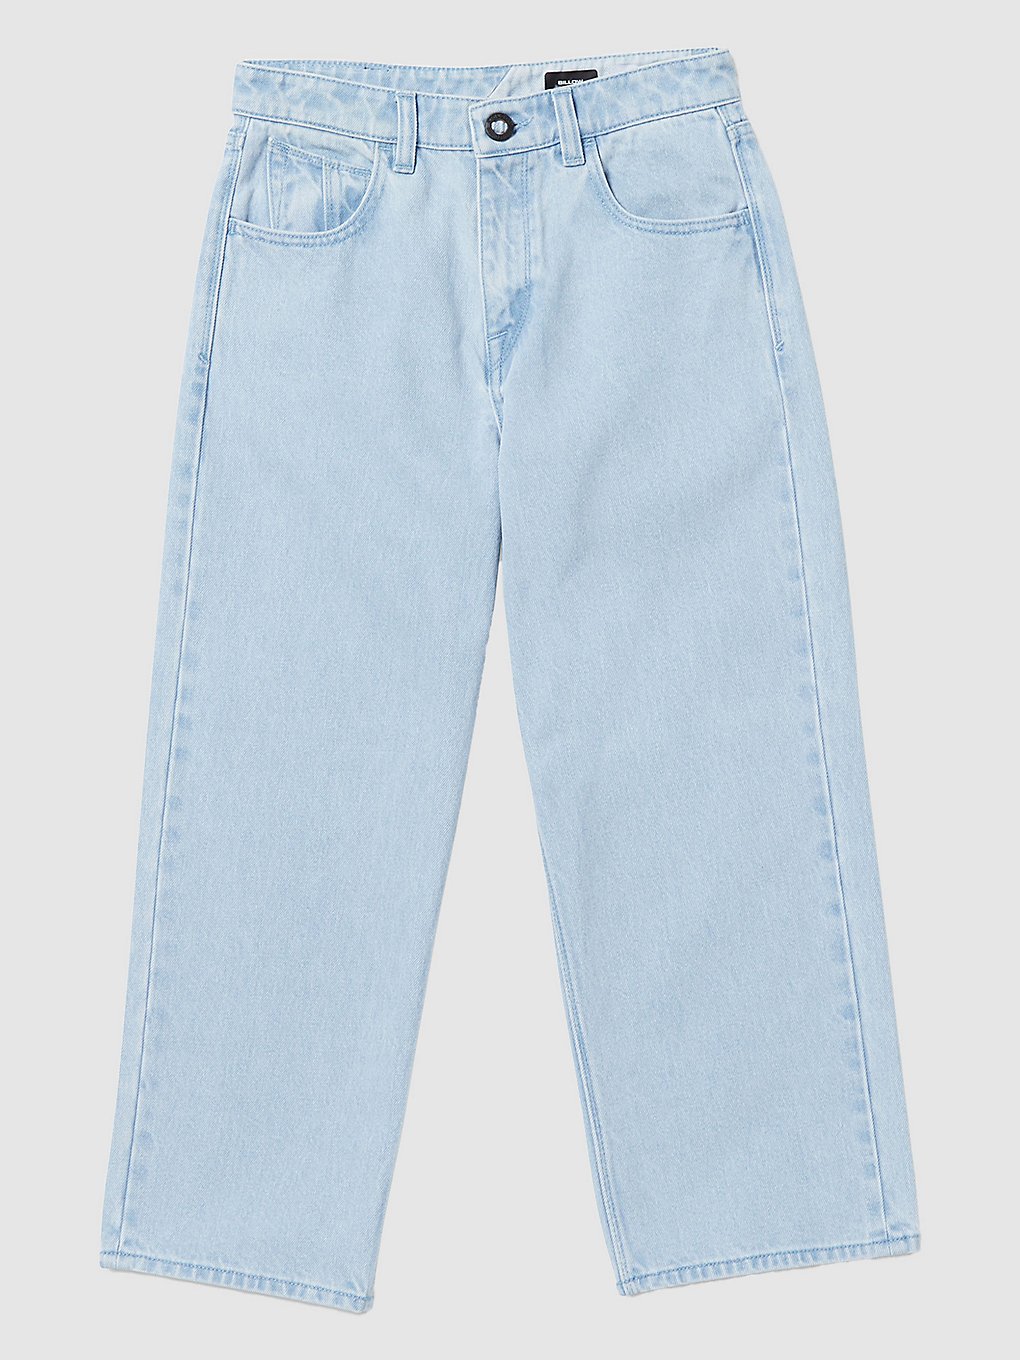 Volcom Billow Jeans Hose light blue kaufen